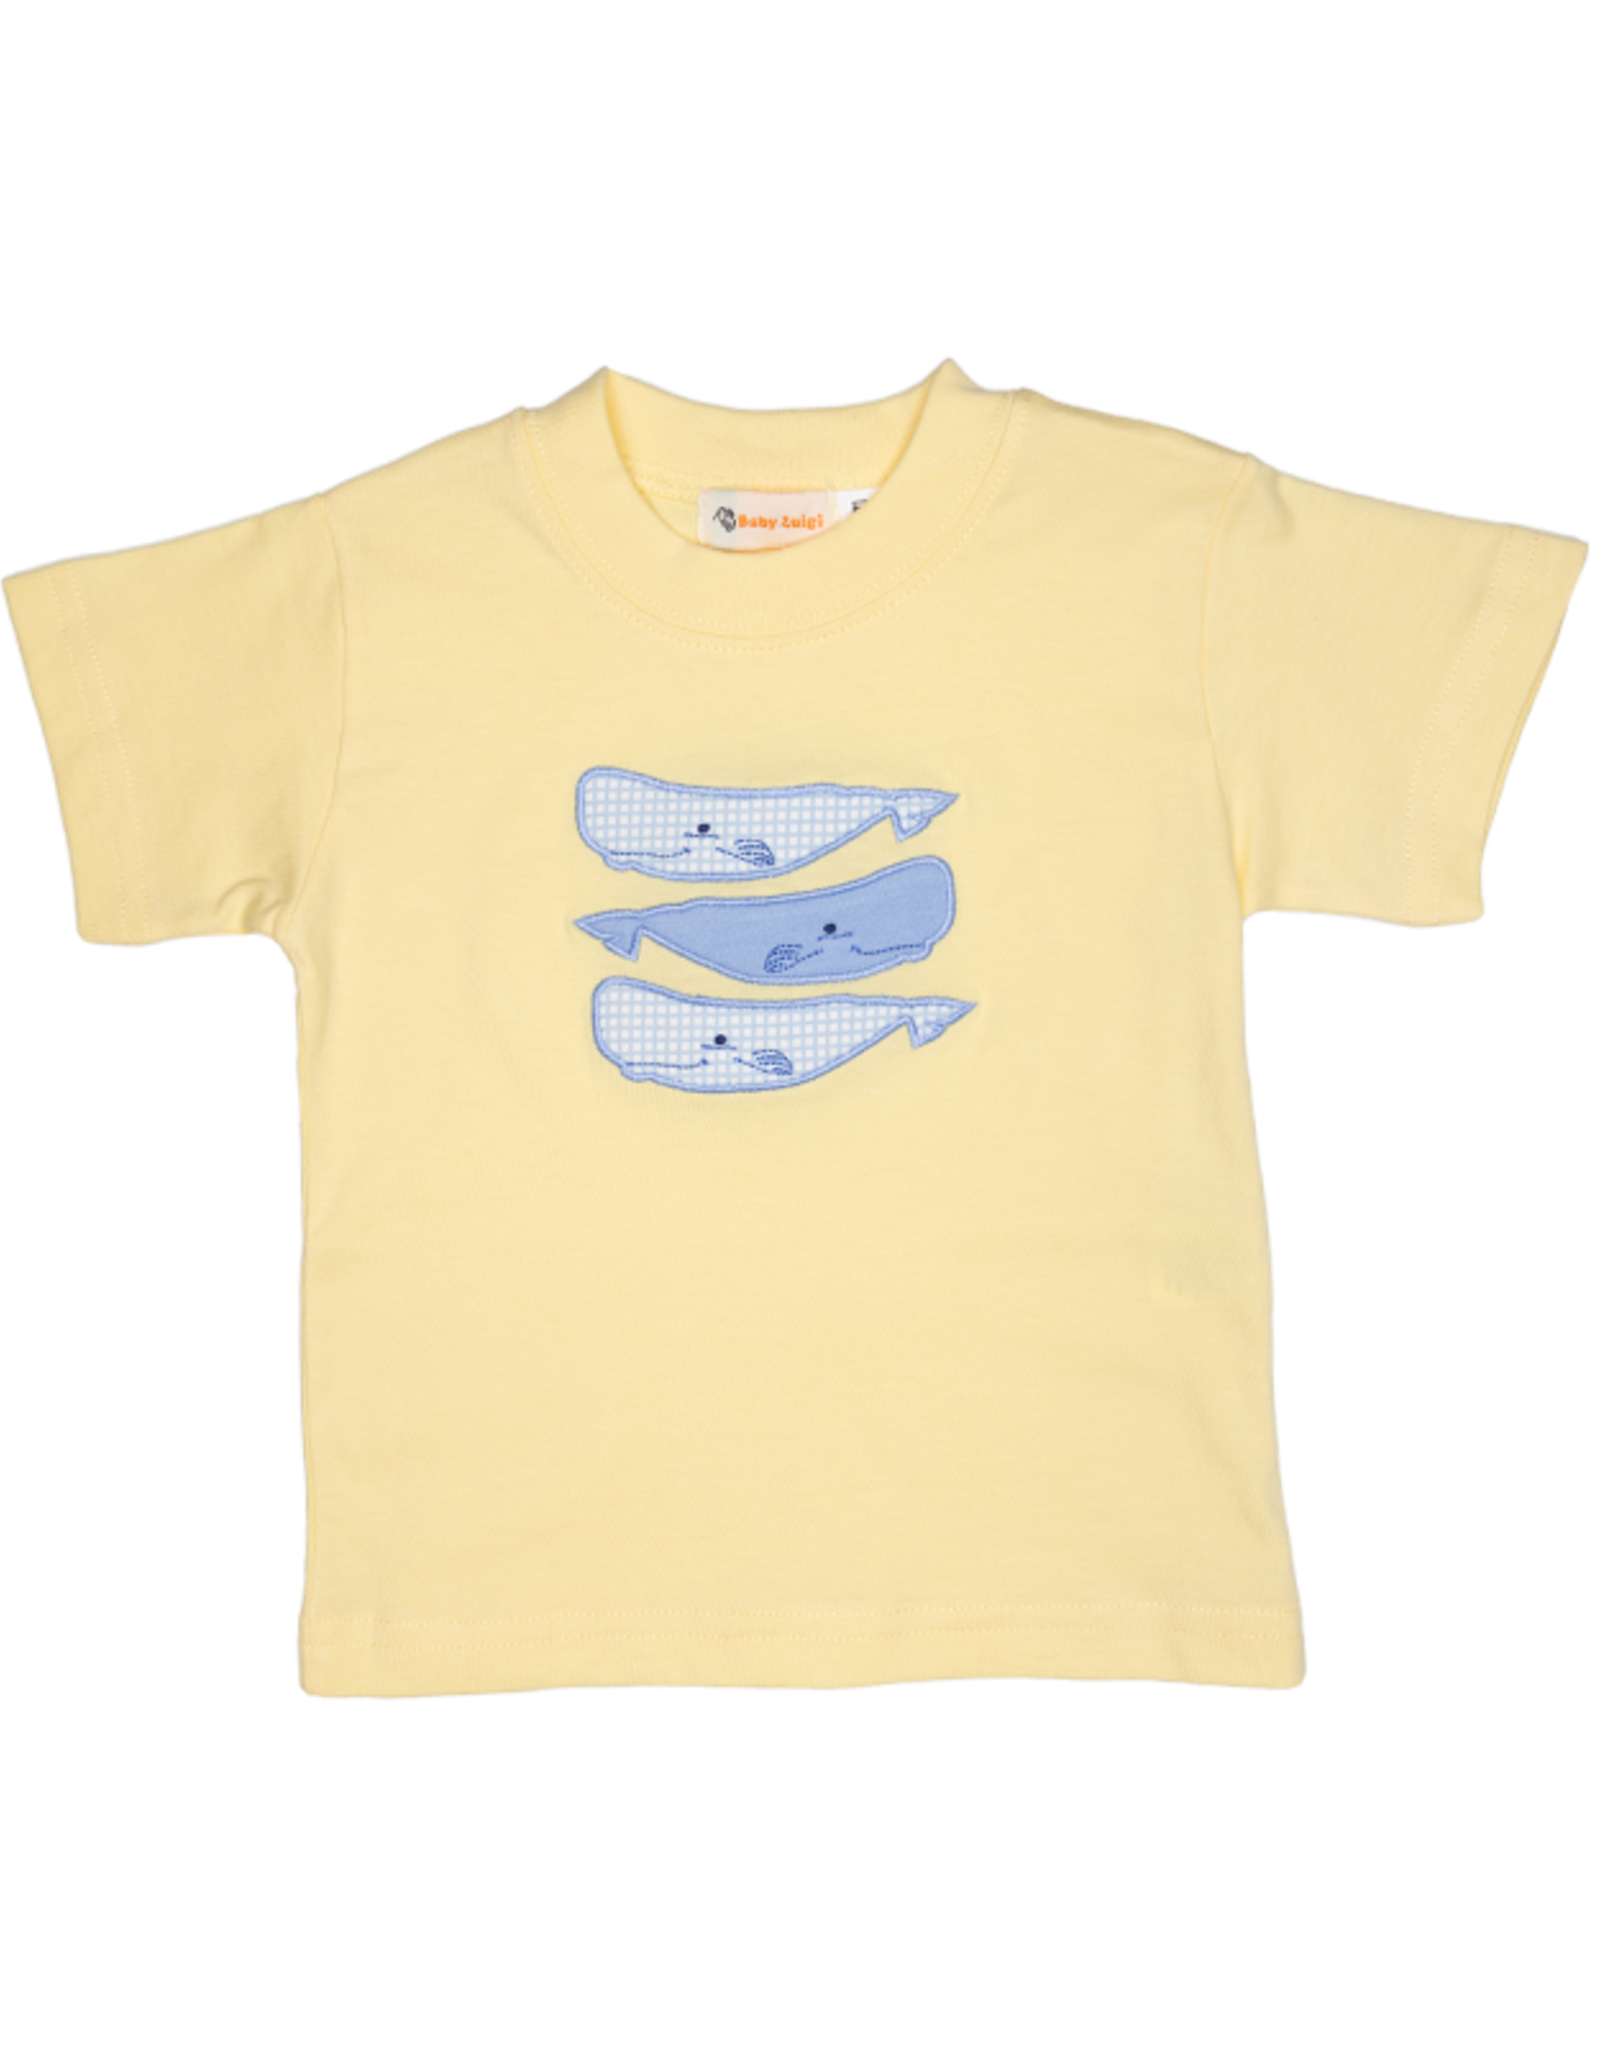 Luigi S24 Yellow Stacked Whale Shirt